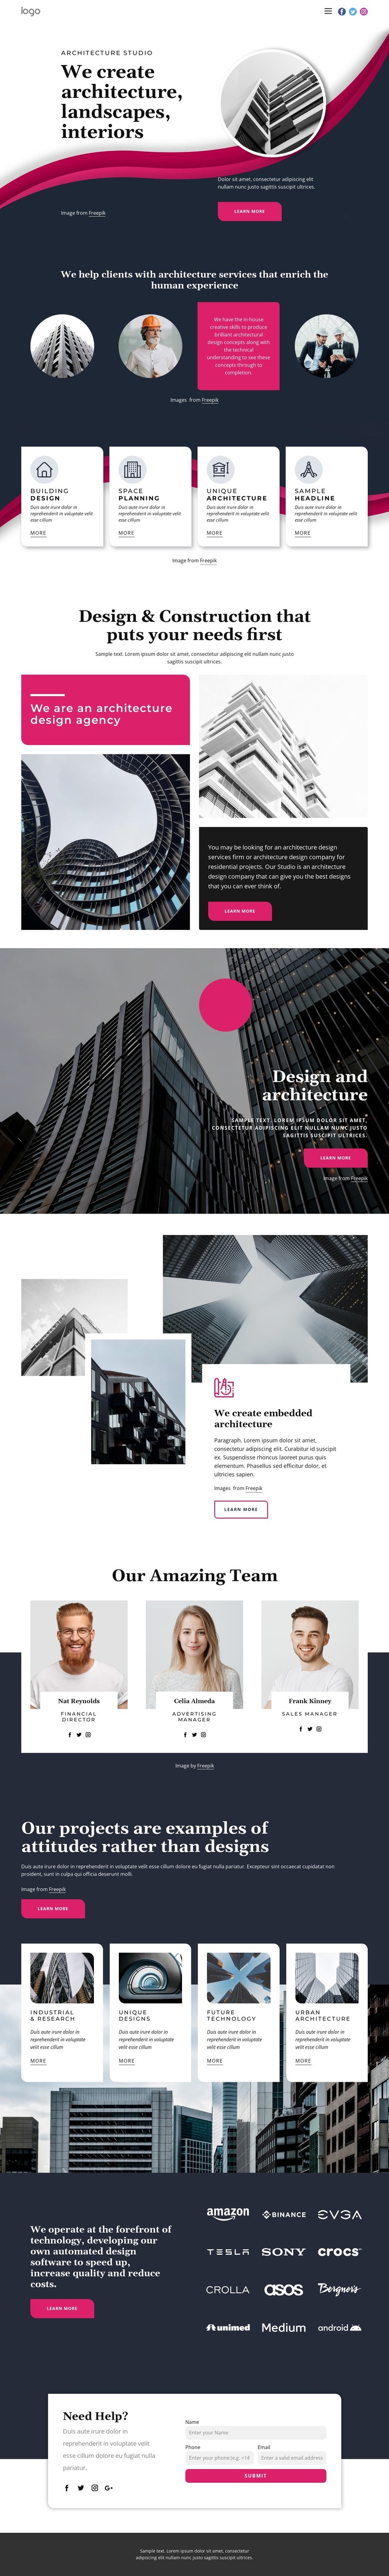 We create great architecture Web Design